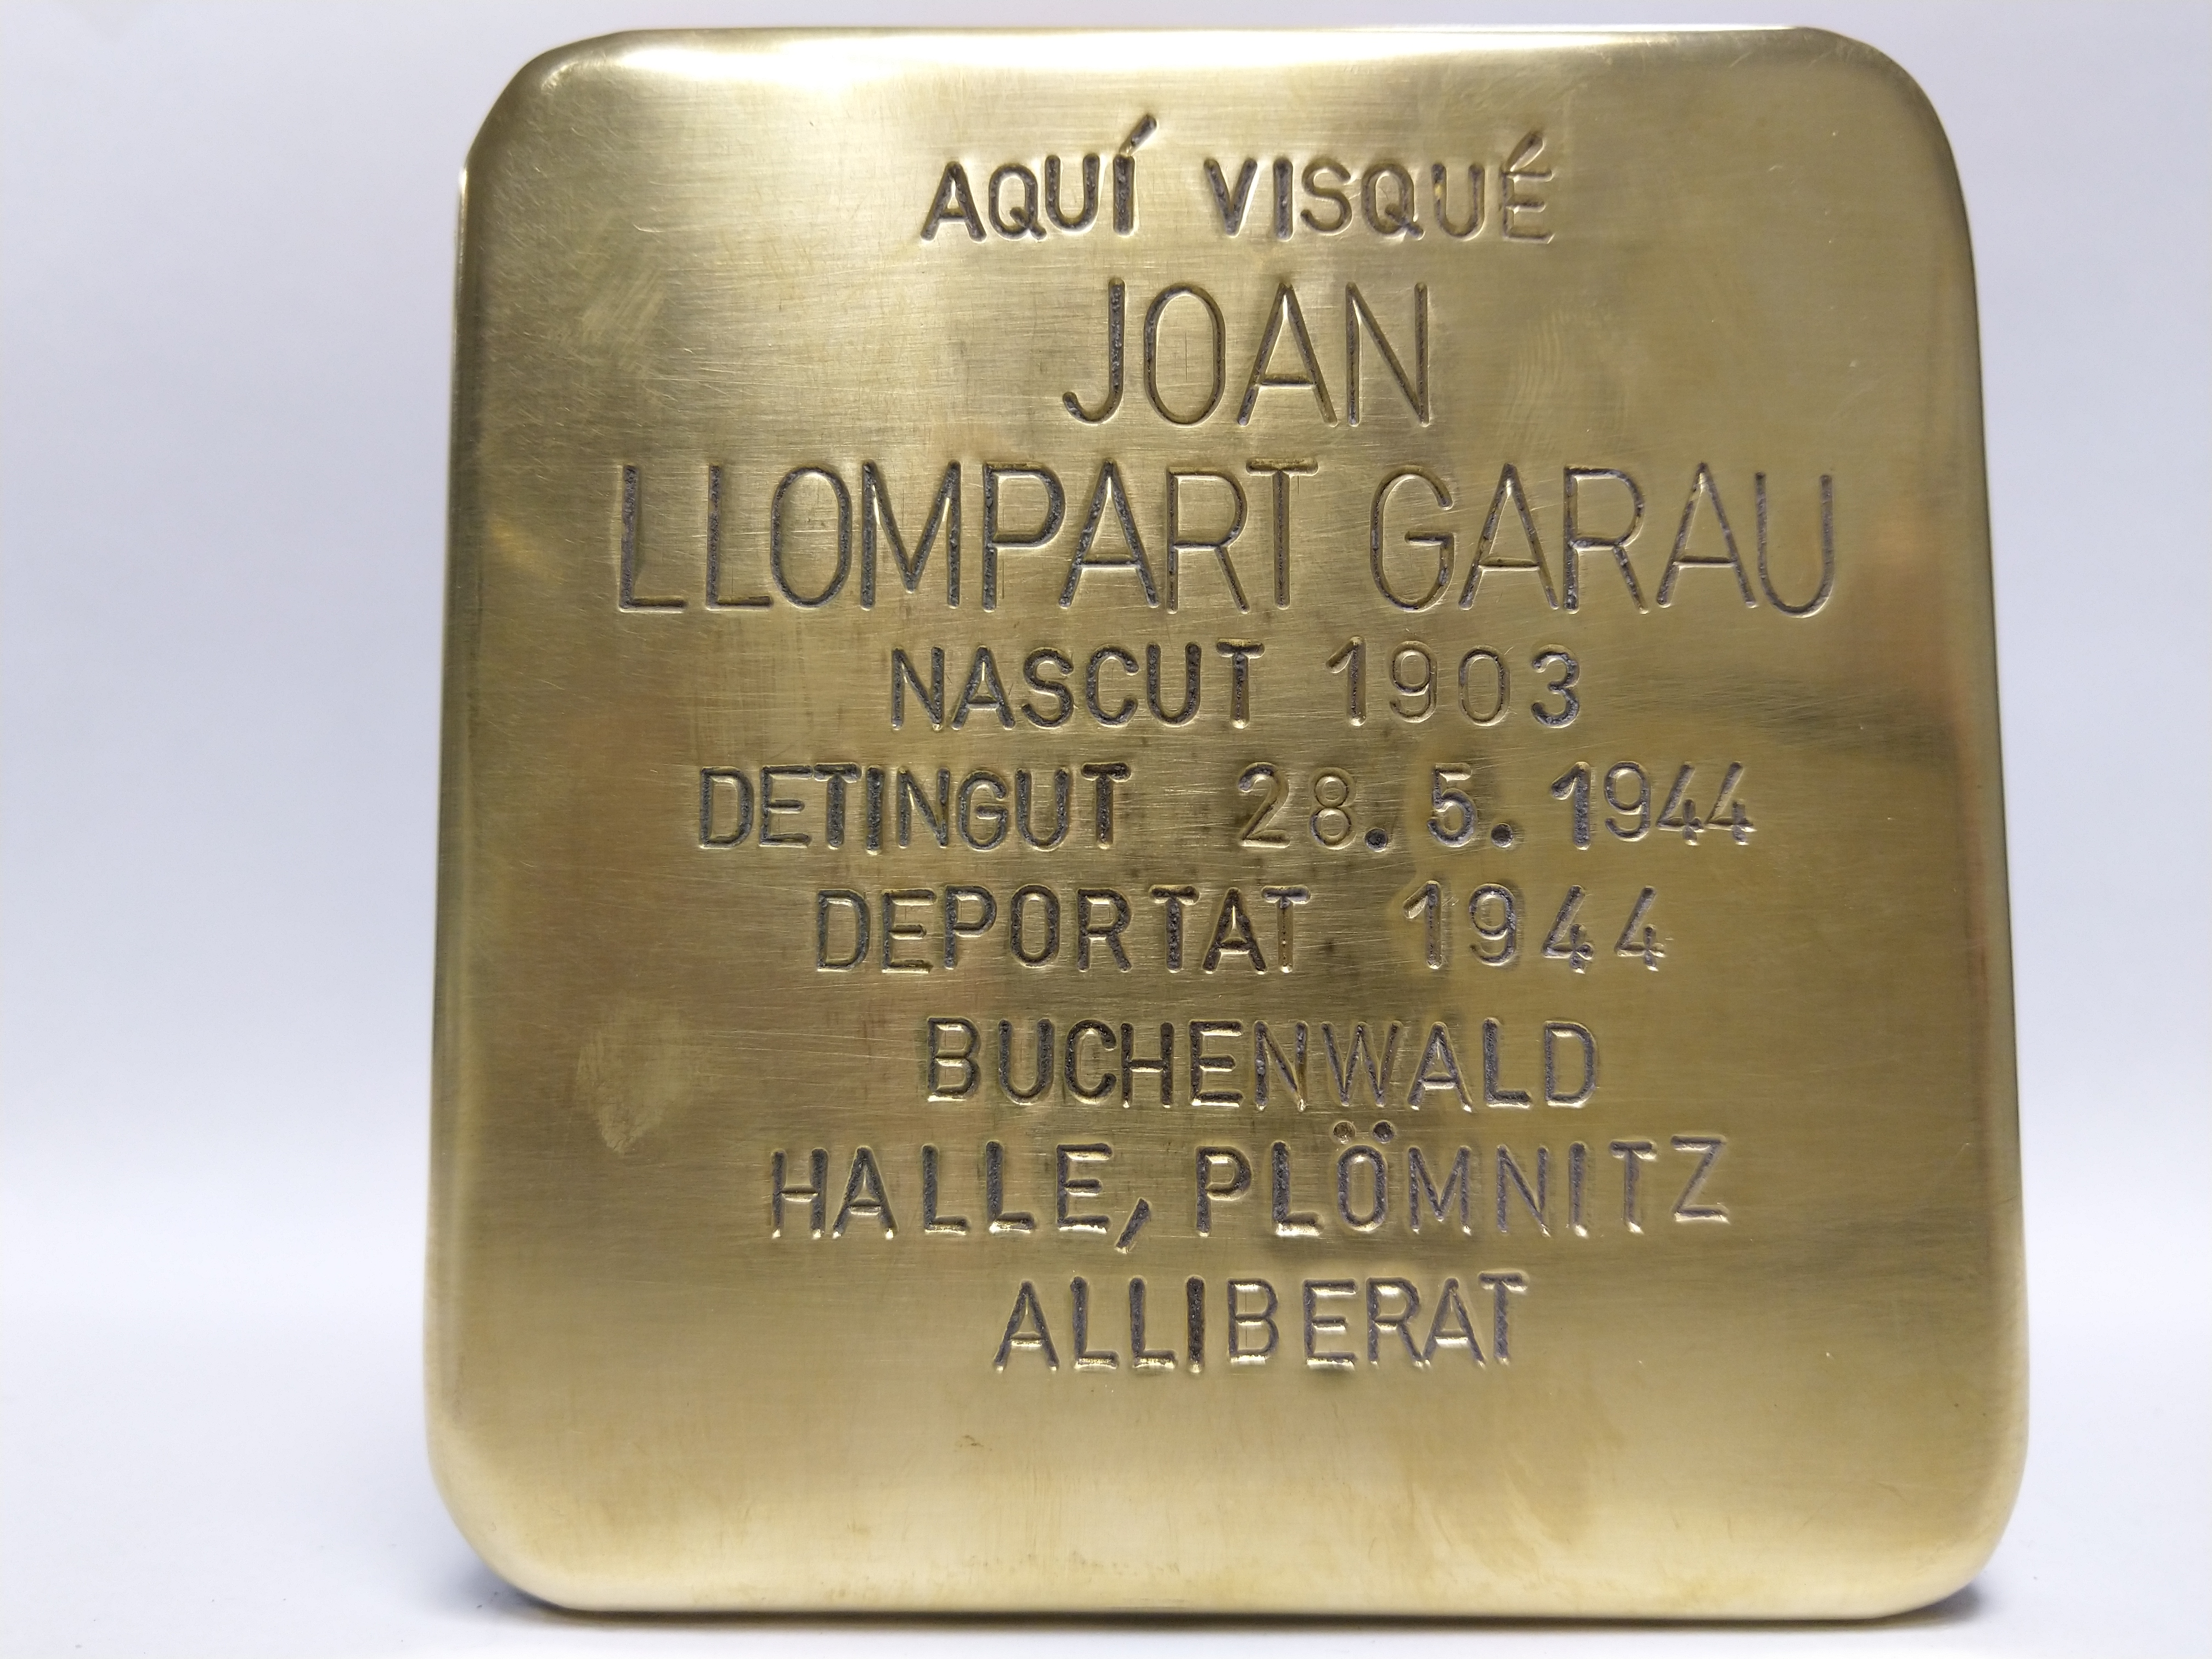 Llompart Garau, Joan